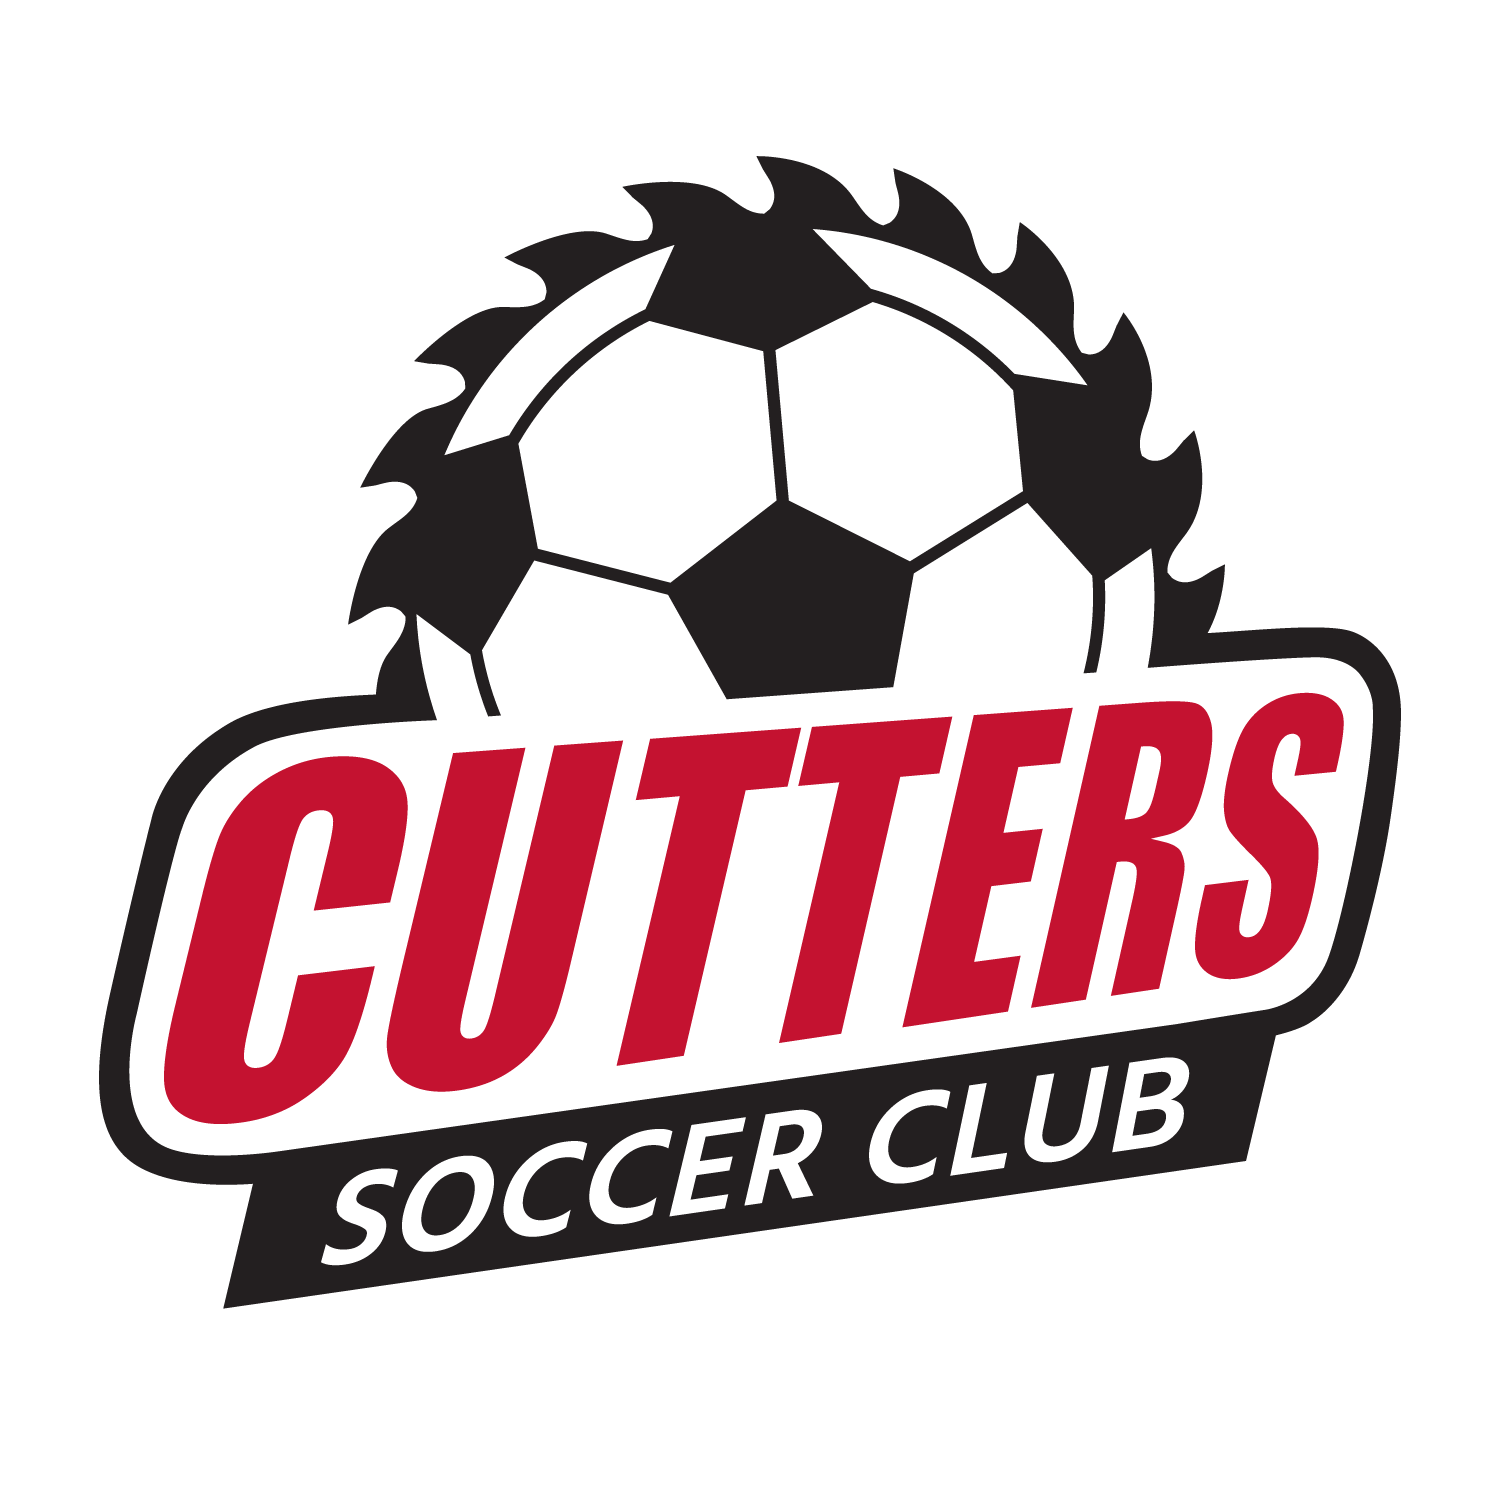 Cutters Soccer Club team badge